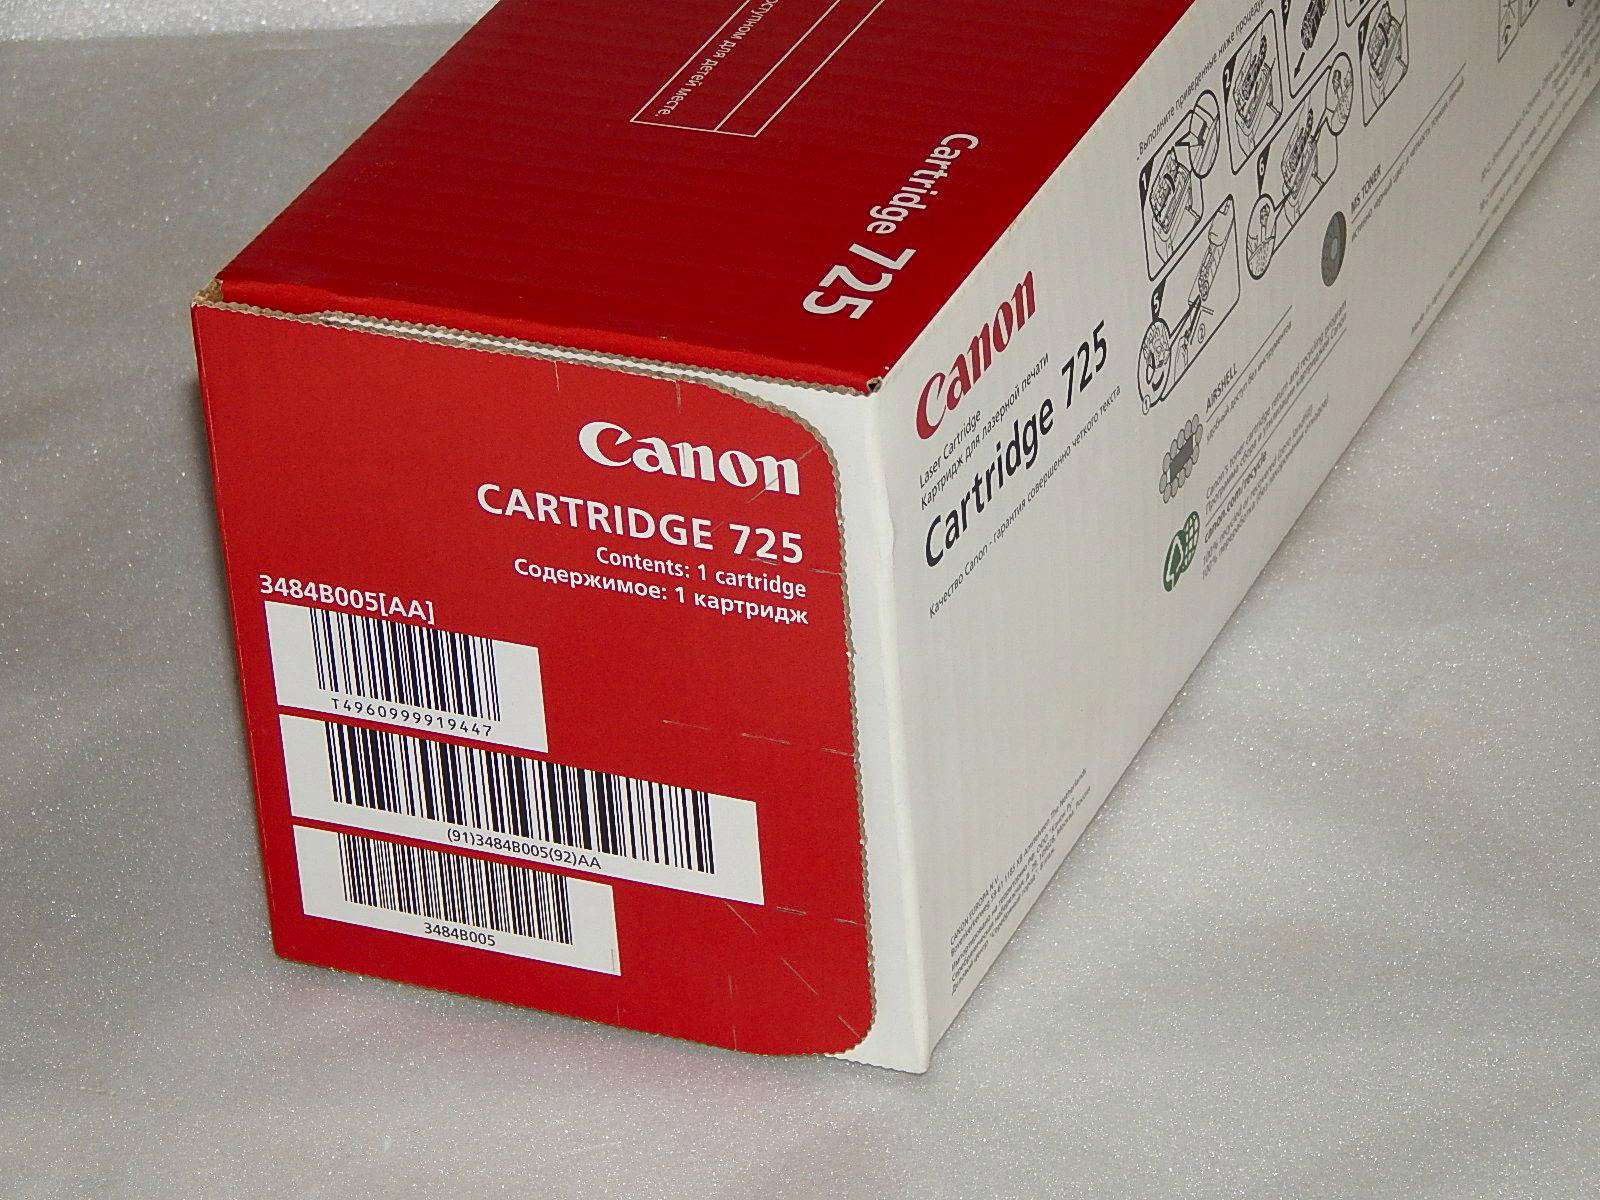 Canon cartridge 725. Картридж Canon 725. Картридж Canon 725 (3484b005). Canon 725 картридж оригинал. Картридж для Canon 725, Ep.